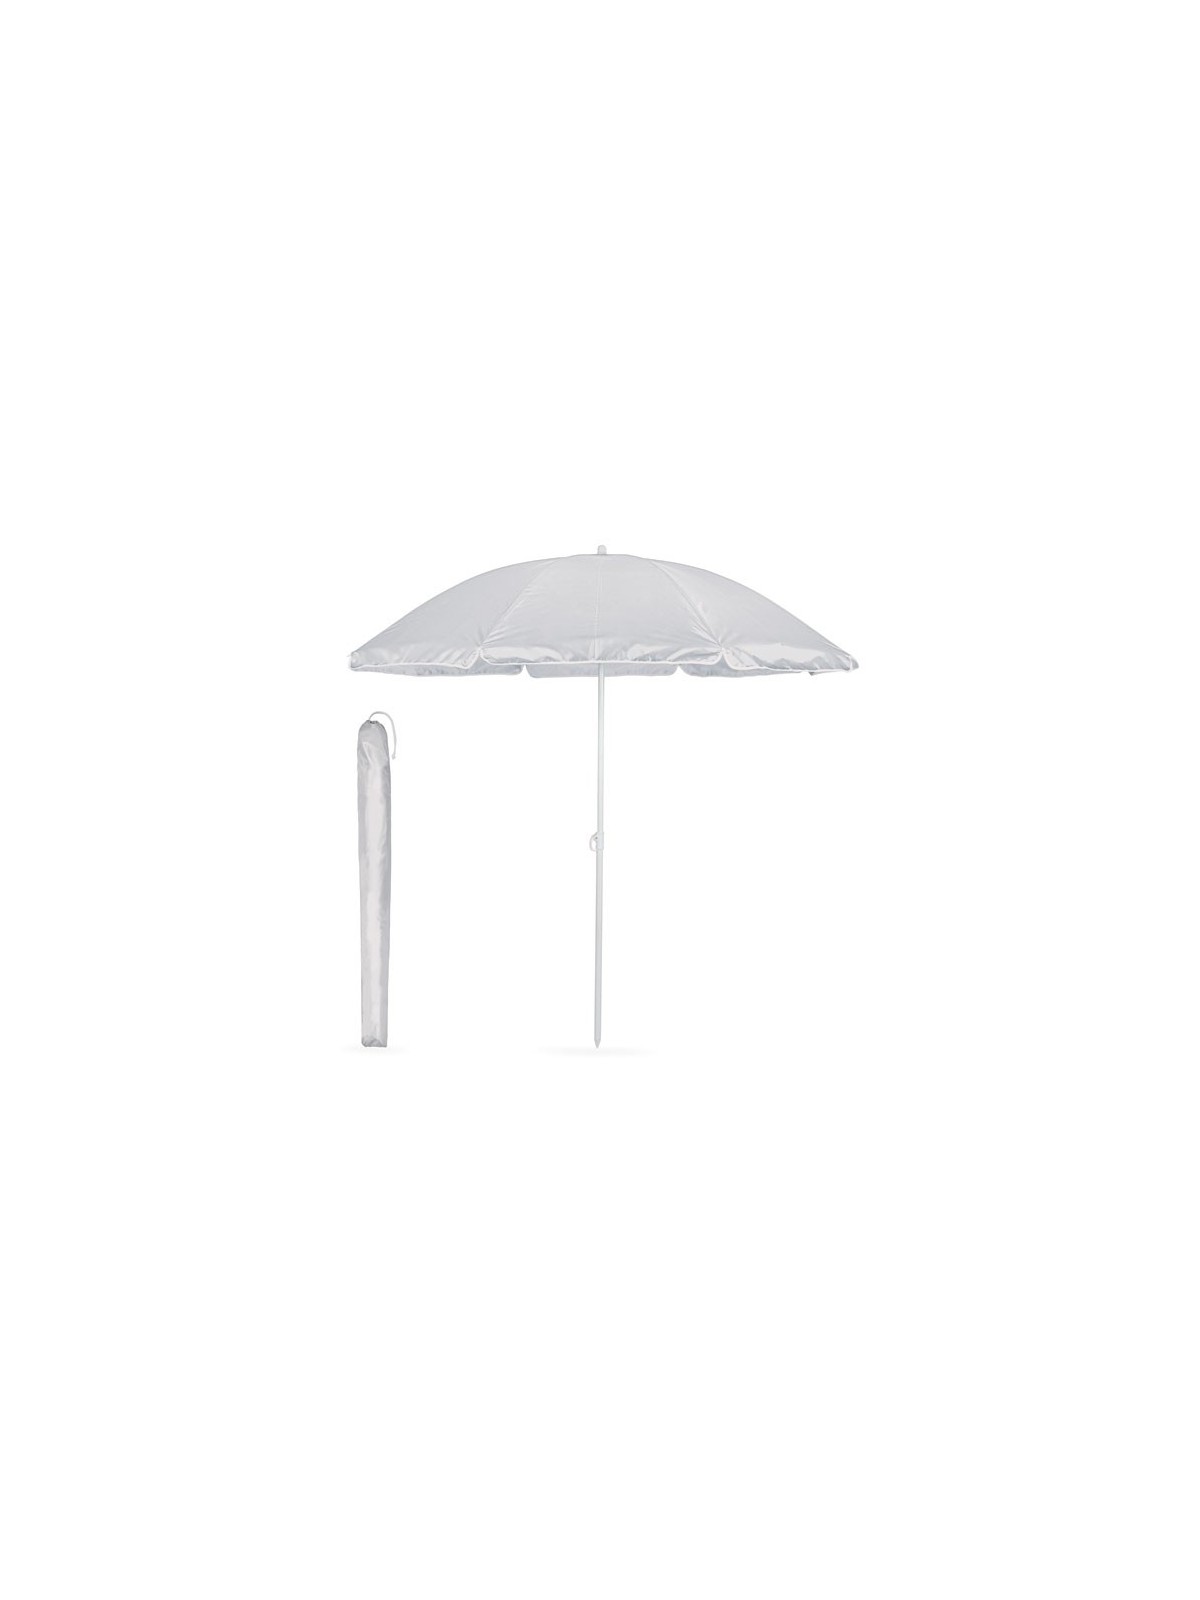 42-550 Parasol portable anti UV  personnalisé